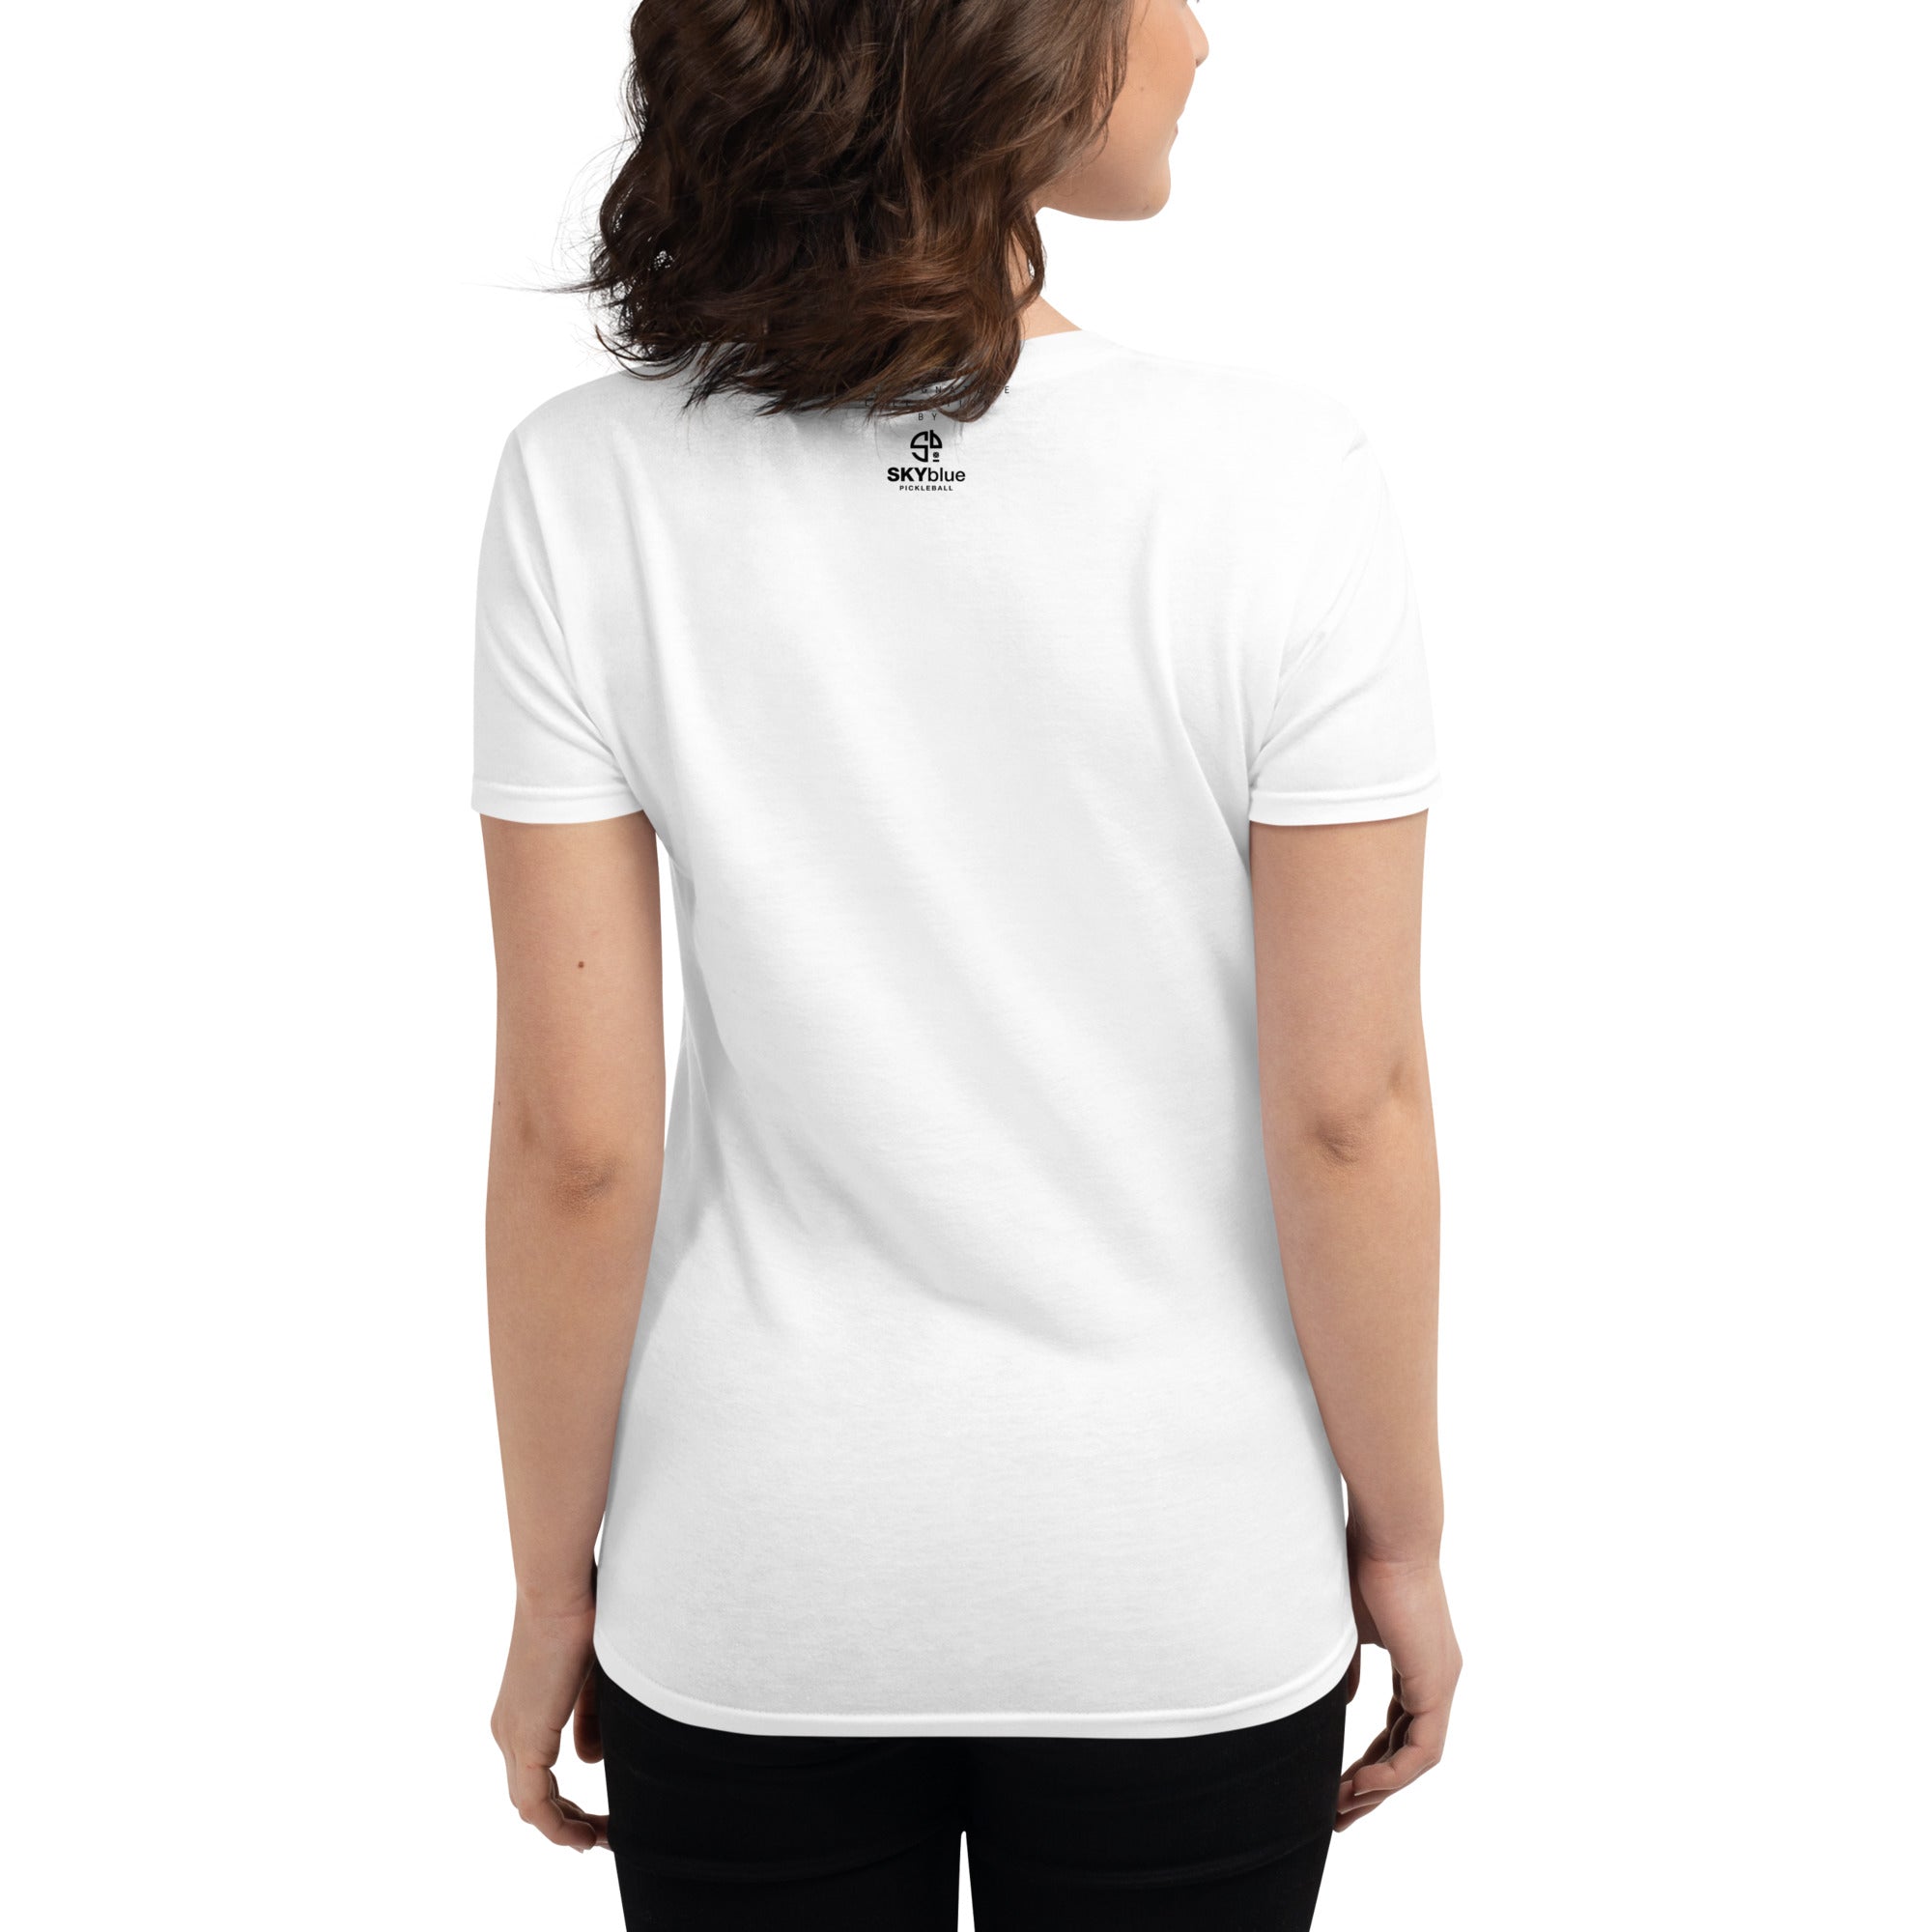 NPC Retro Collection - "I LOVE pickleball!" Women's Short Sleeve Cotton Shirt.